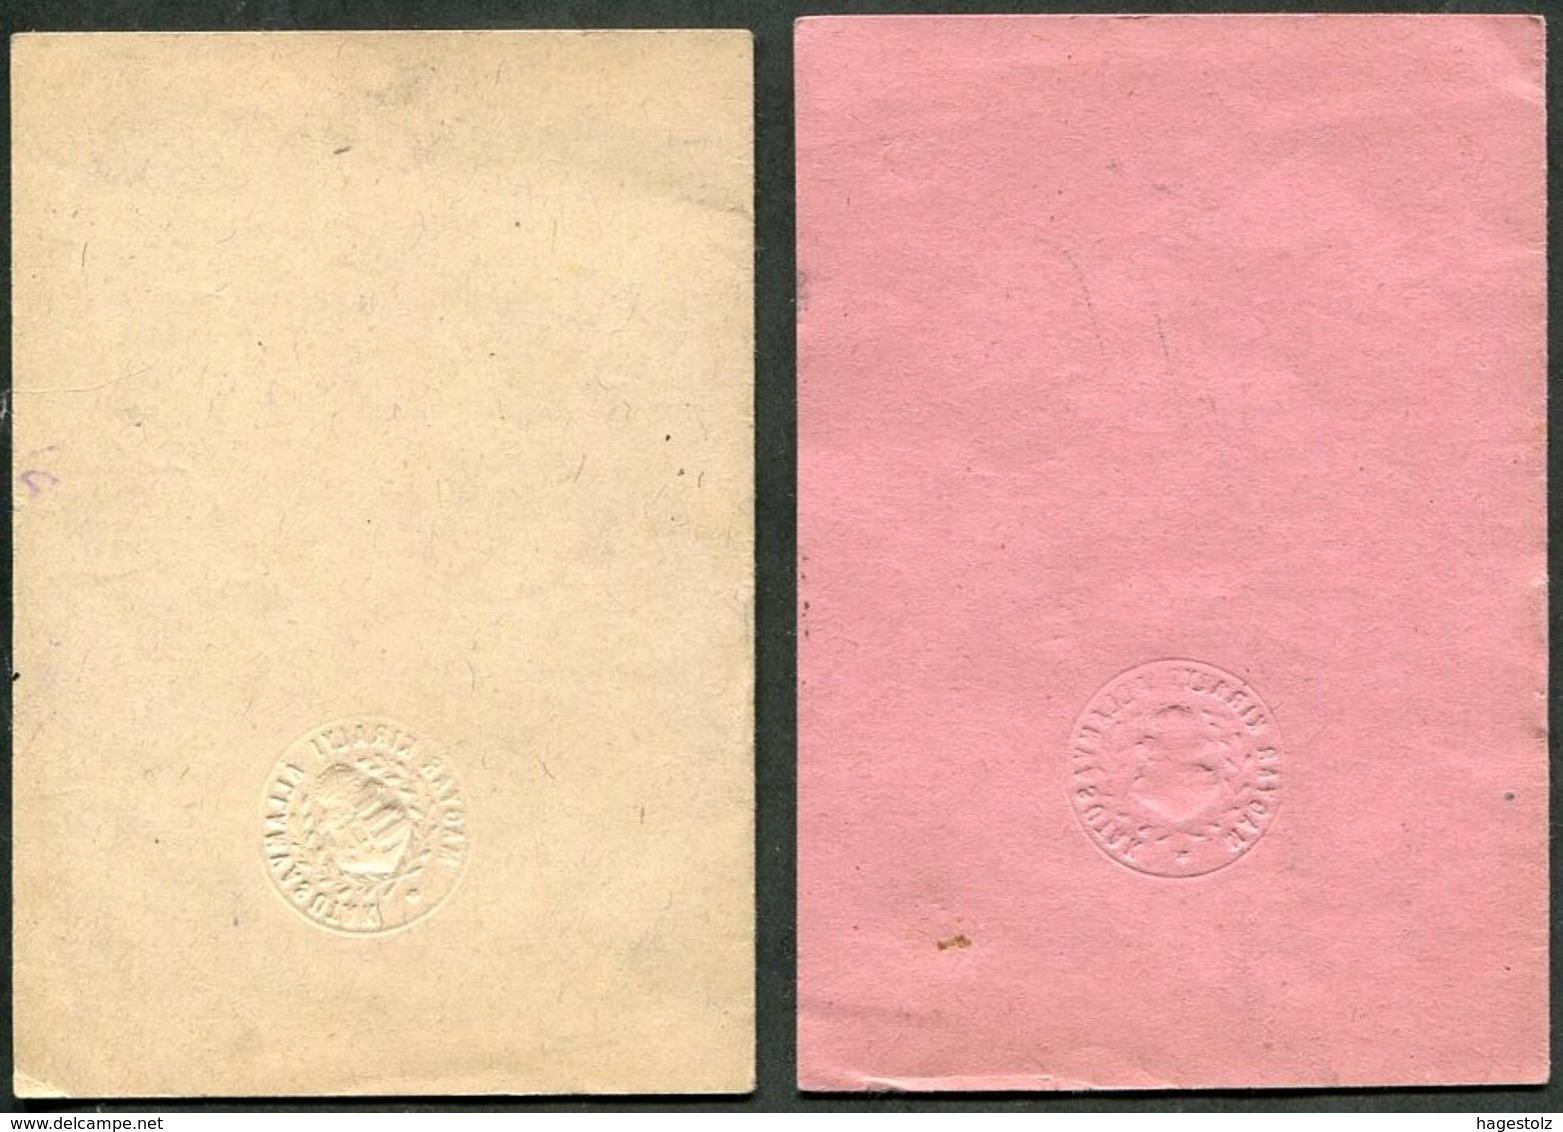 Hungary 1926 Railway Service Free Ticket ID + Additional Coupon Booklets (same Nr.) Eisenbahn Fahrschein Billet De Train - Europe